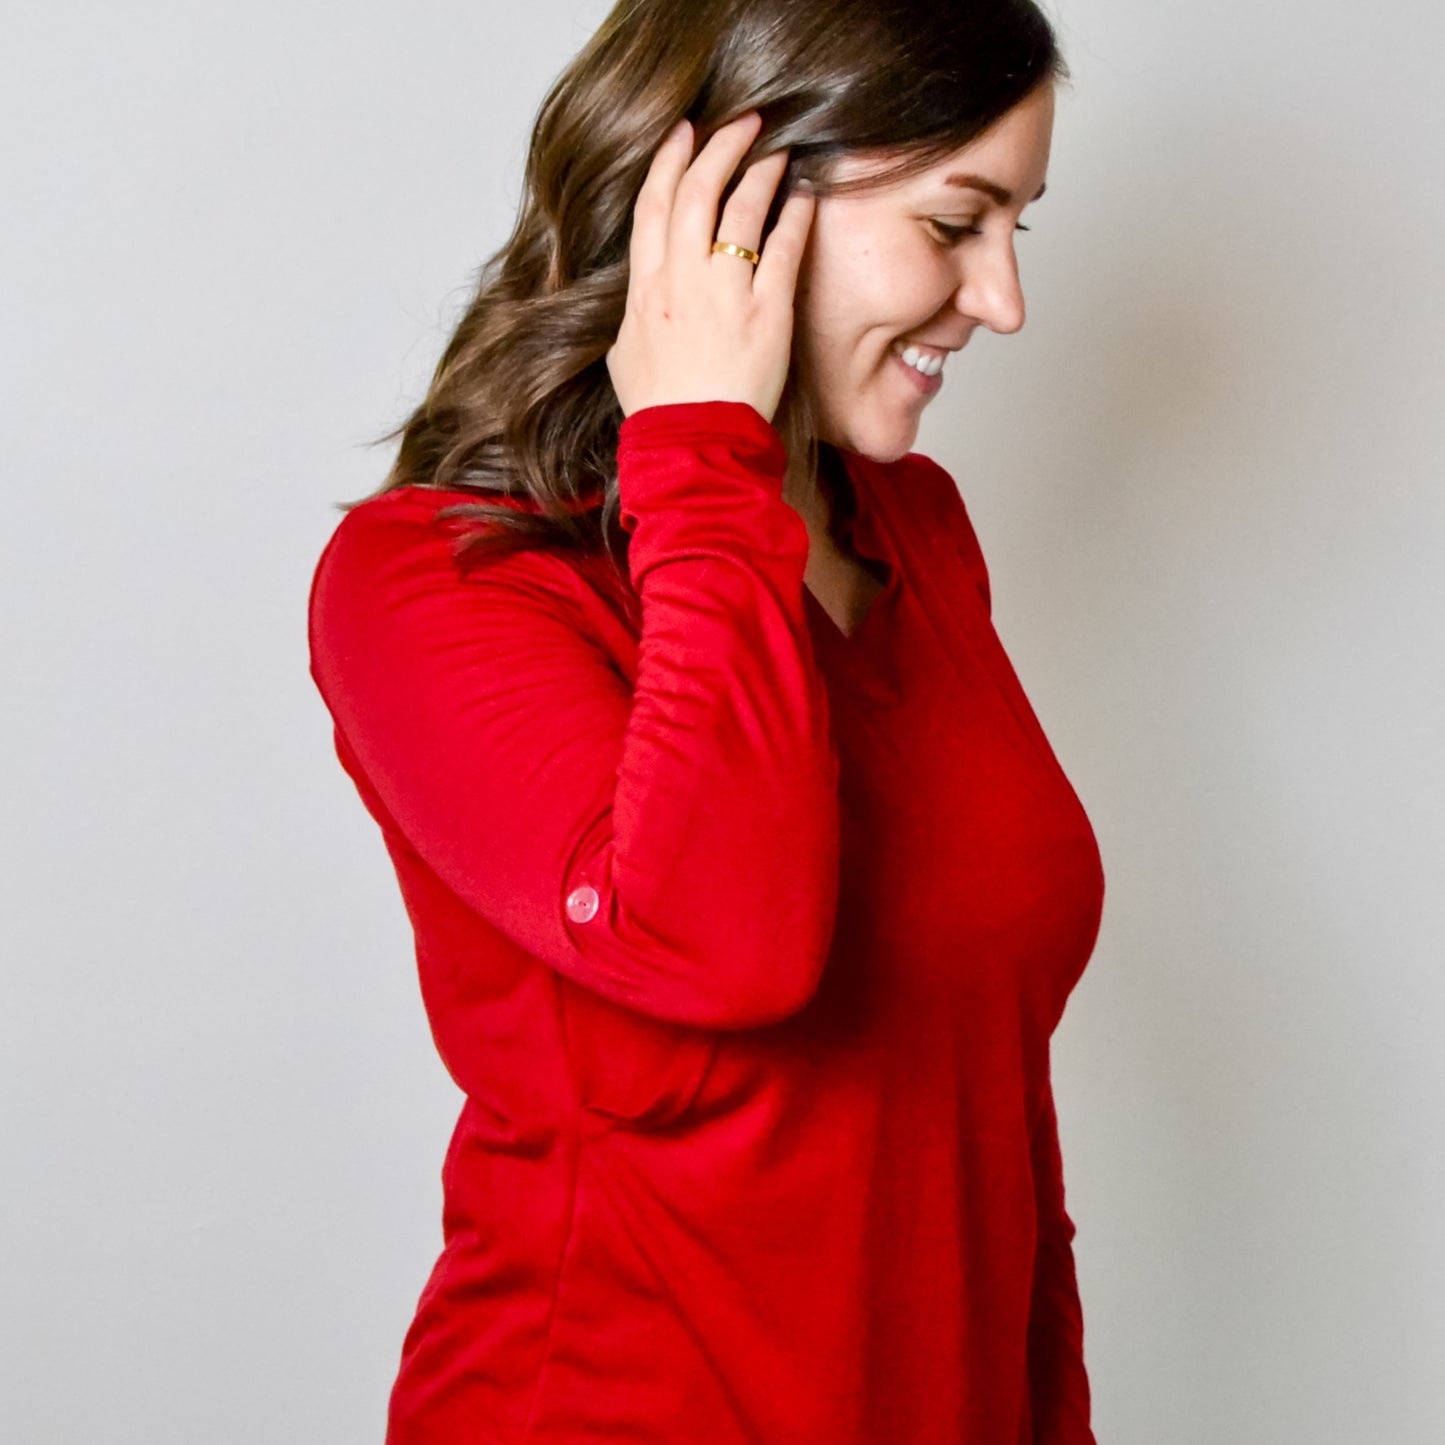 Red long sleeve side access v-neck nursing top